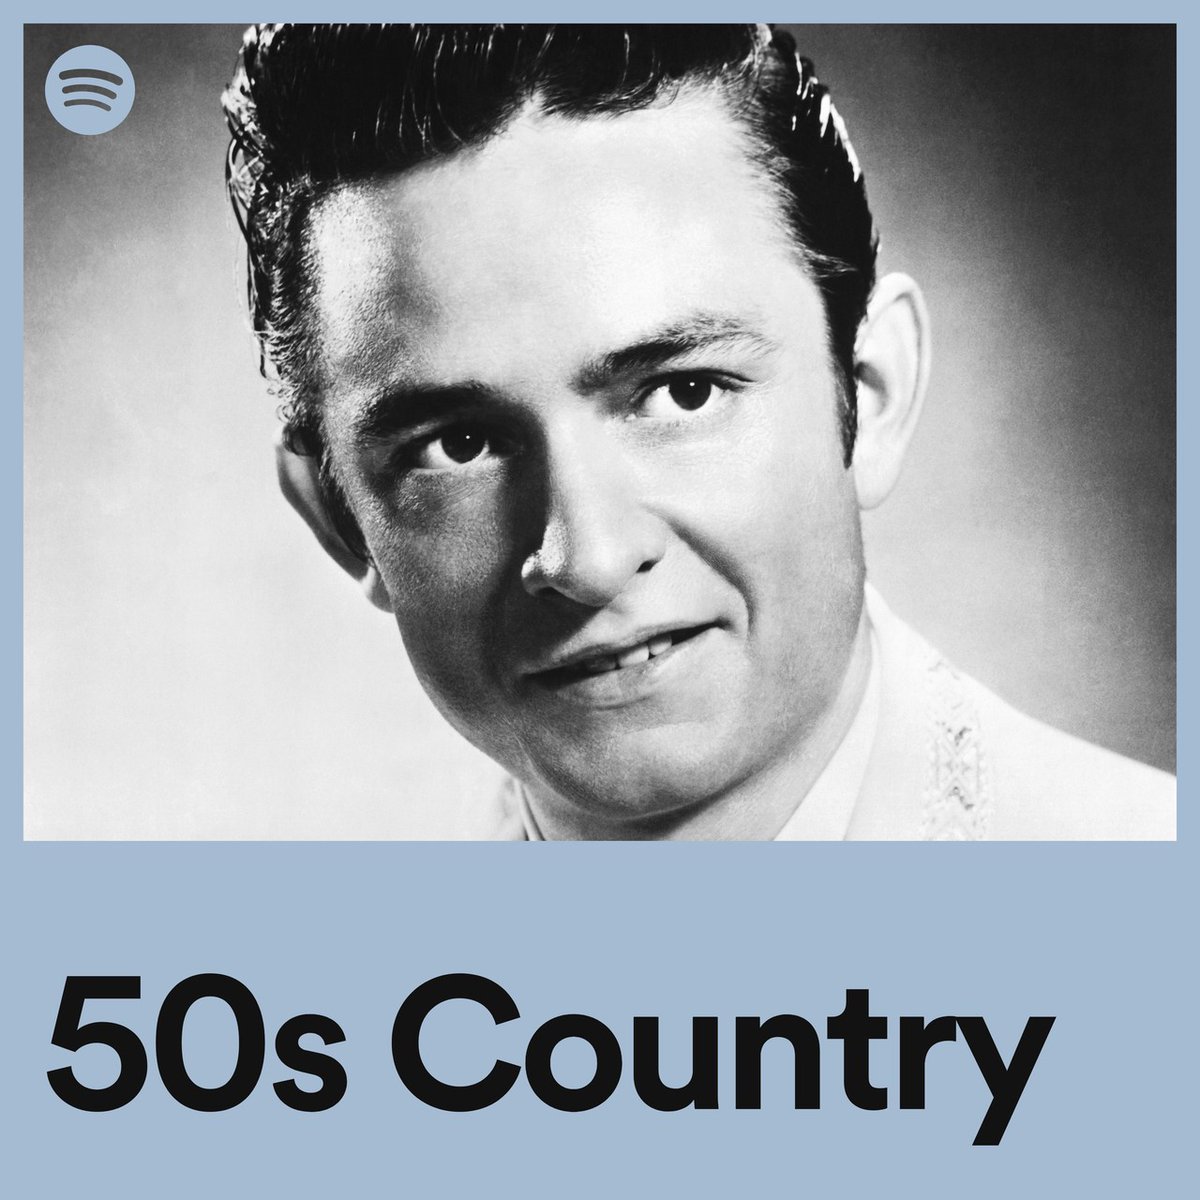 Listen to Johnny Cash on @Spotify’s 50s Country playlist now: bit.ly/JC50sCountry